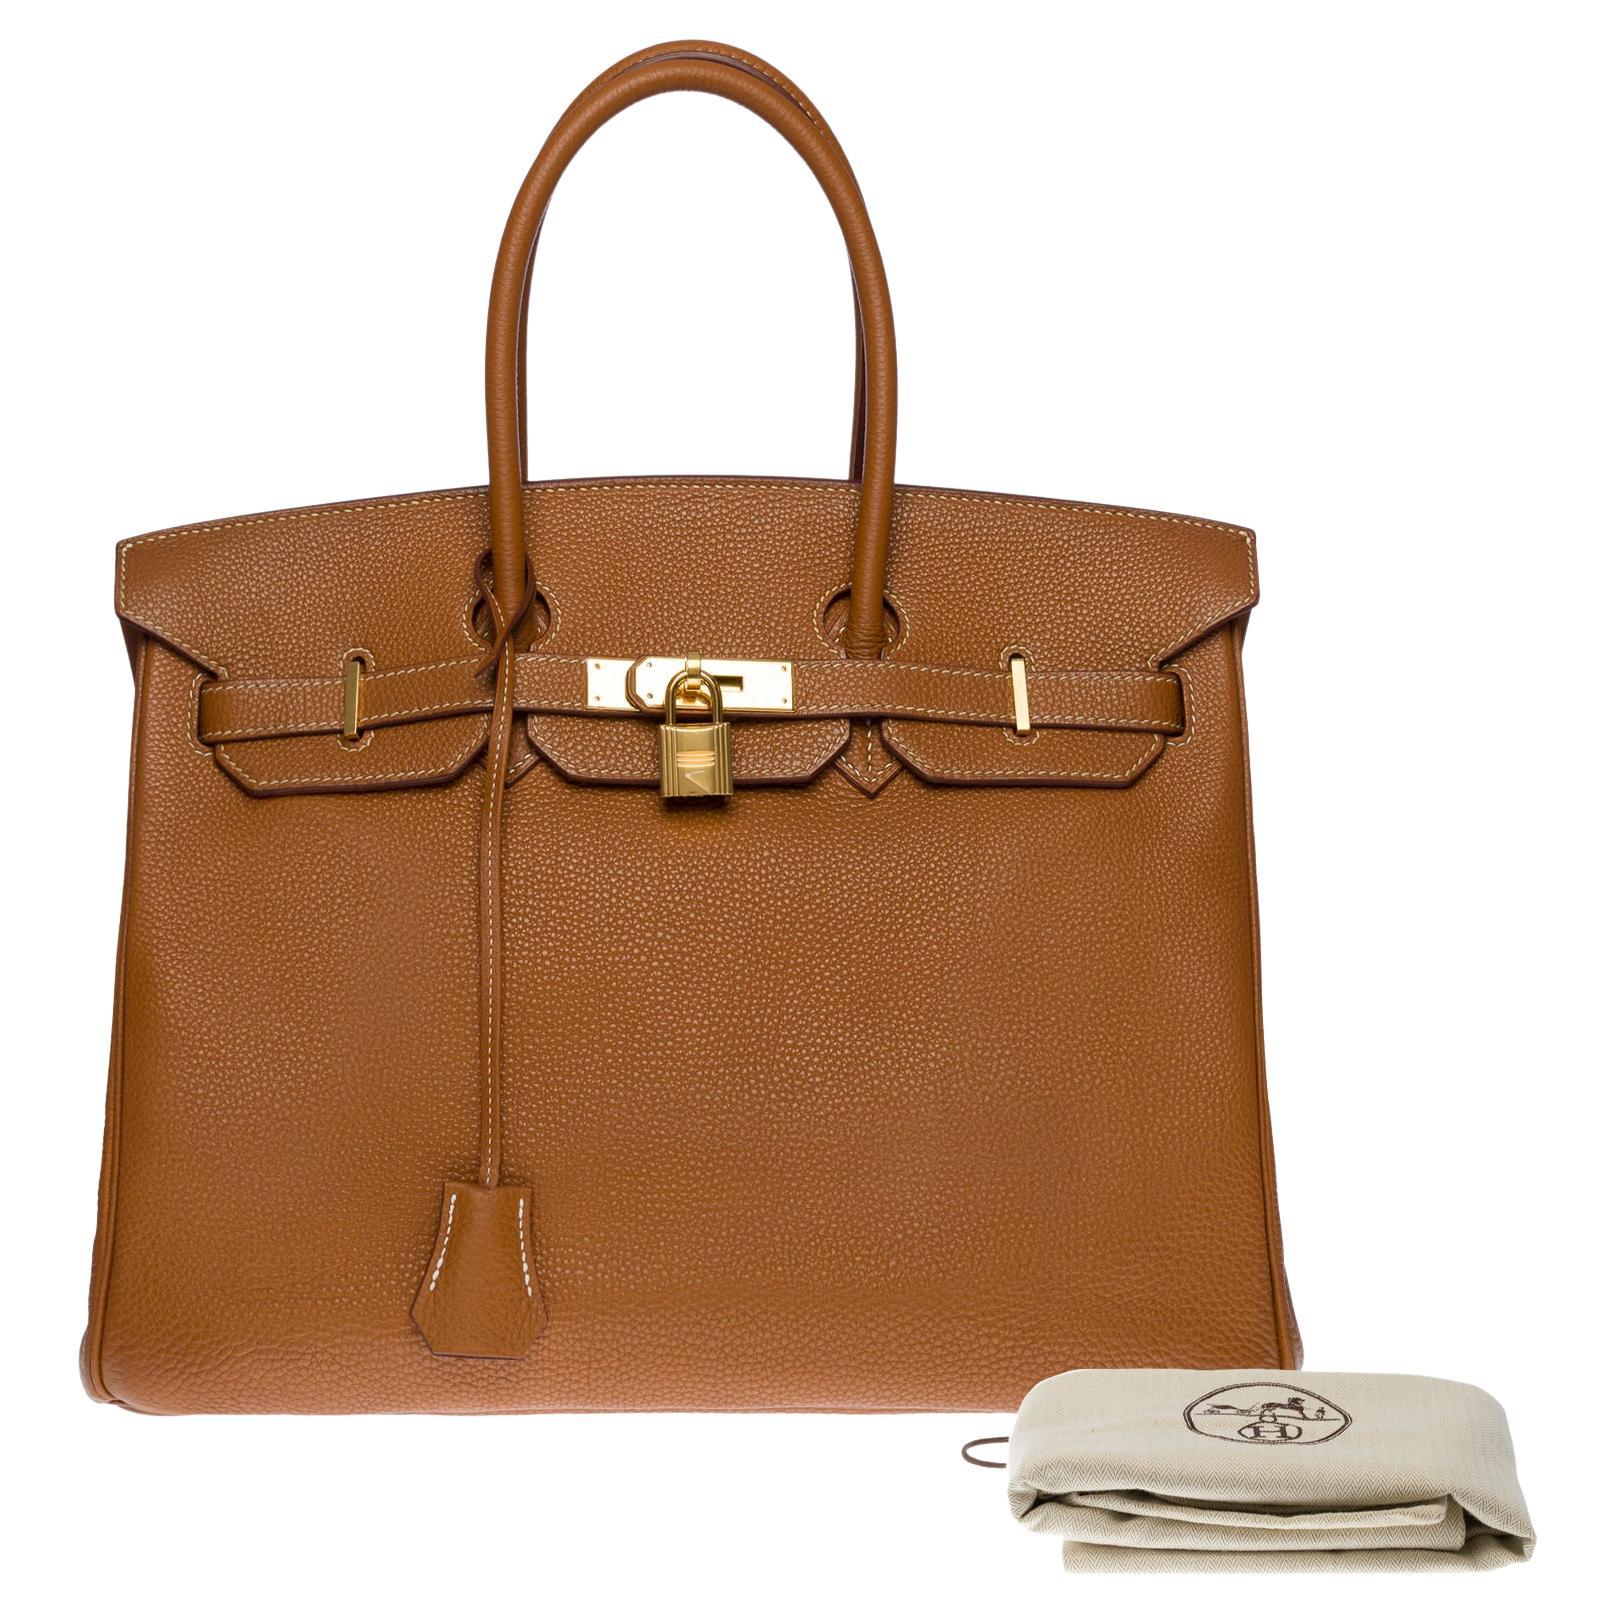 Amazing Hermès Birkin 35 handbag in Camel Togo leather, GHW